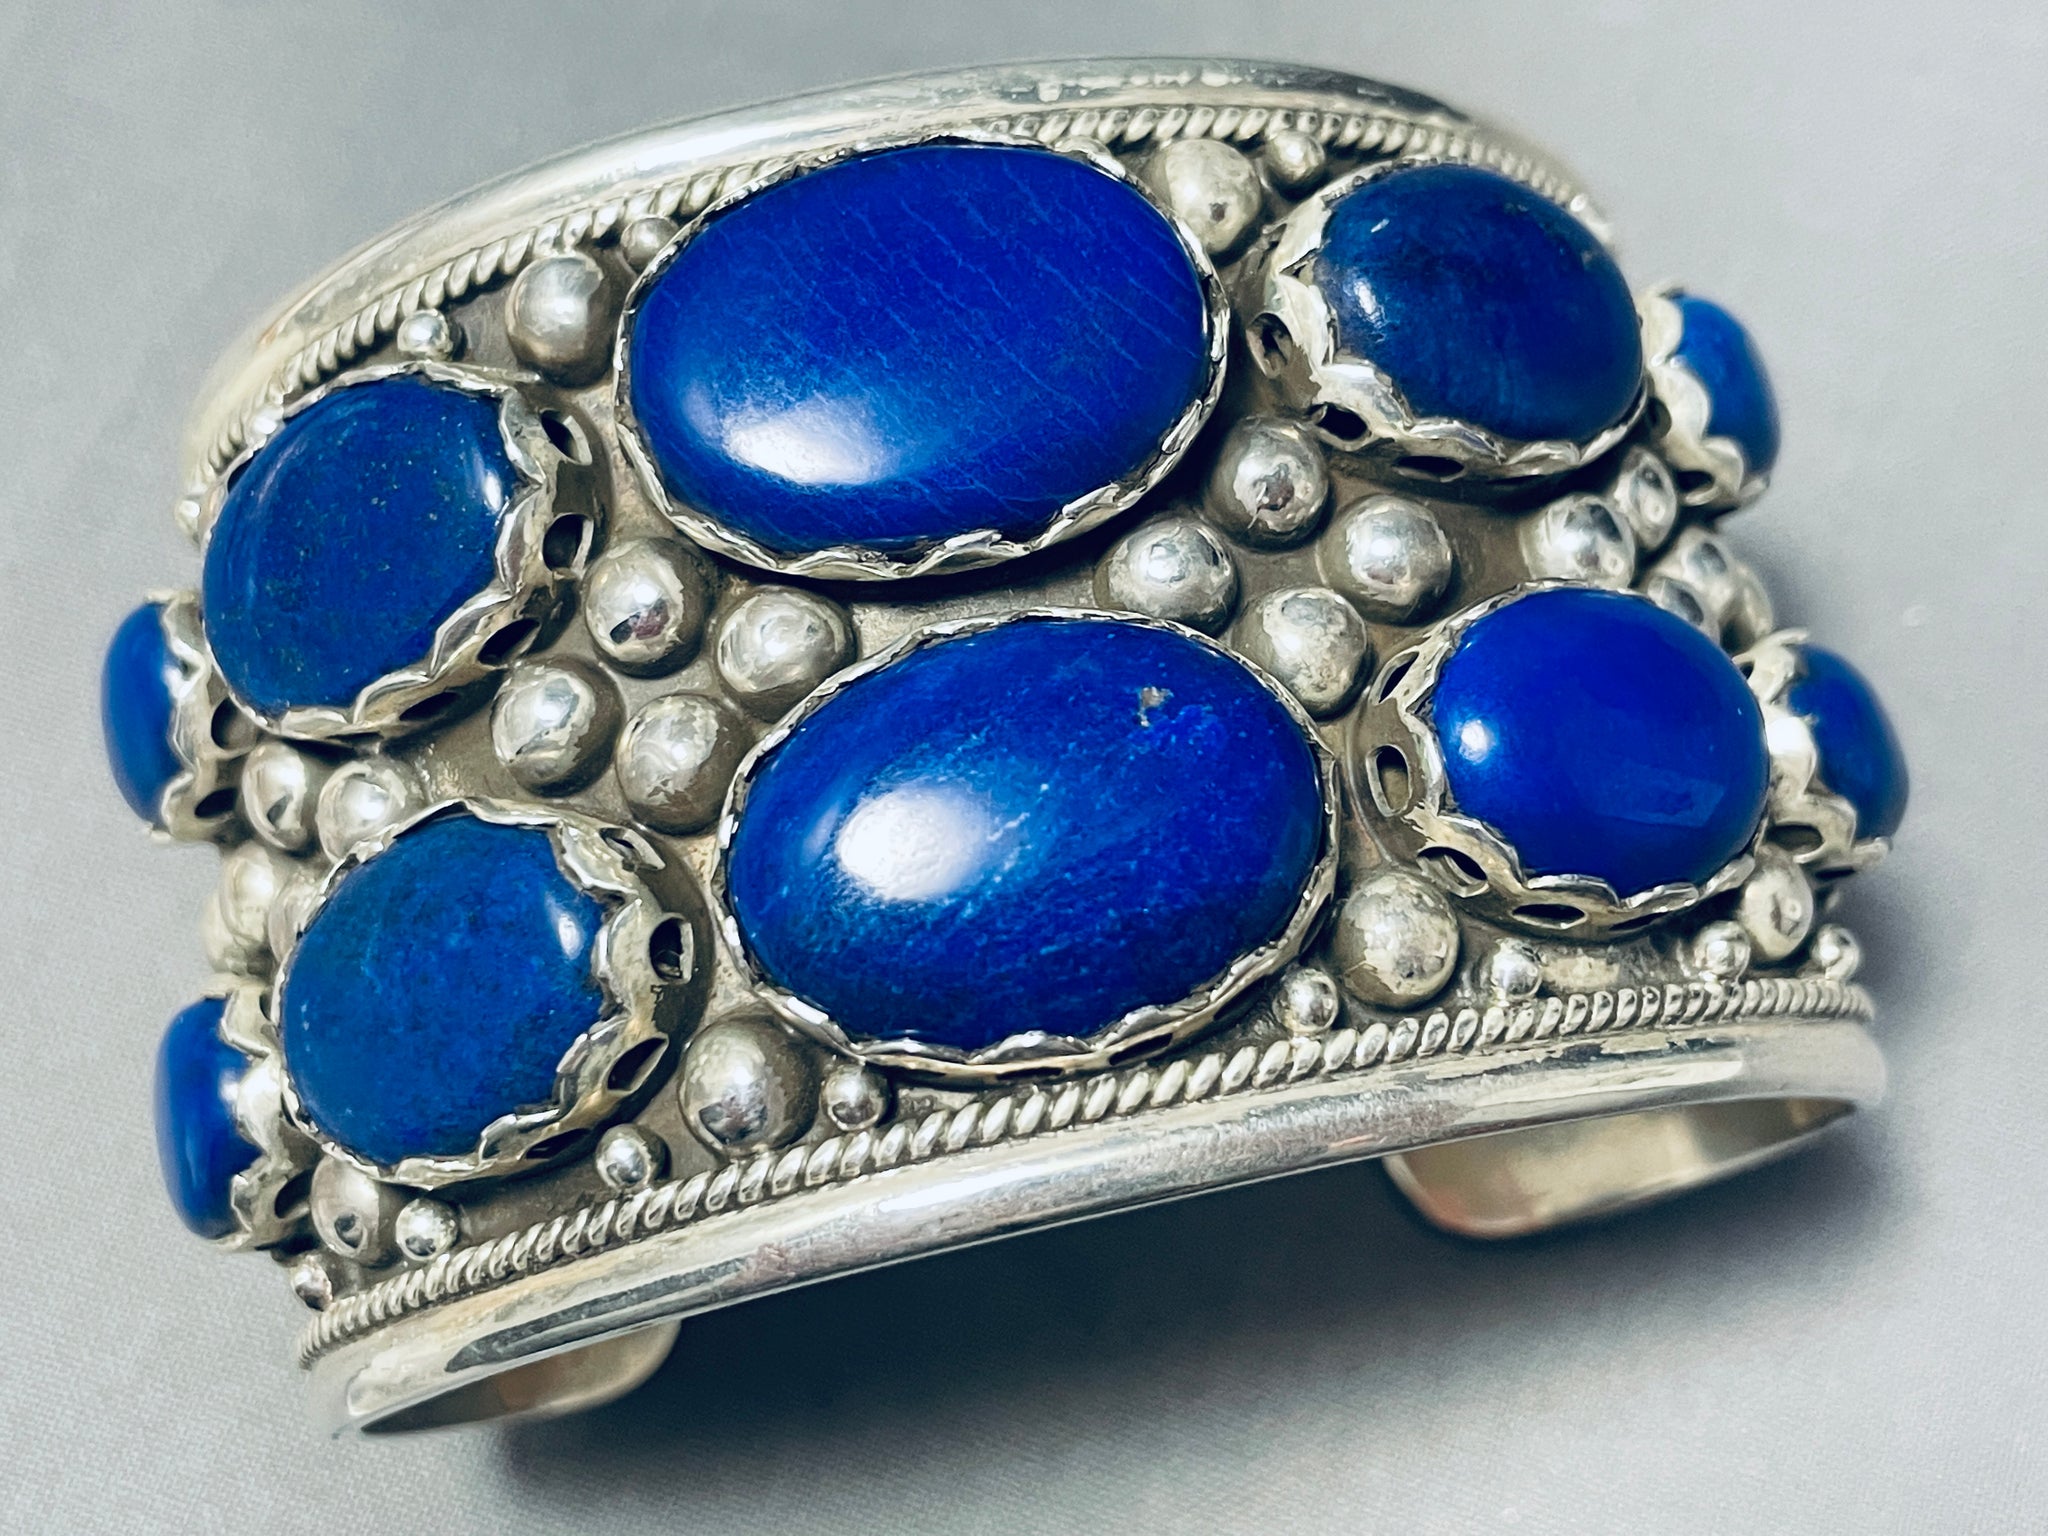 Buy Silver Stainless Steel Blue Lapis Gemstone Bracelet Online - Inox  Jewelry India